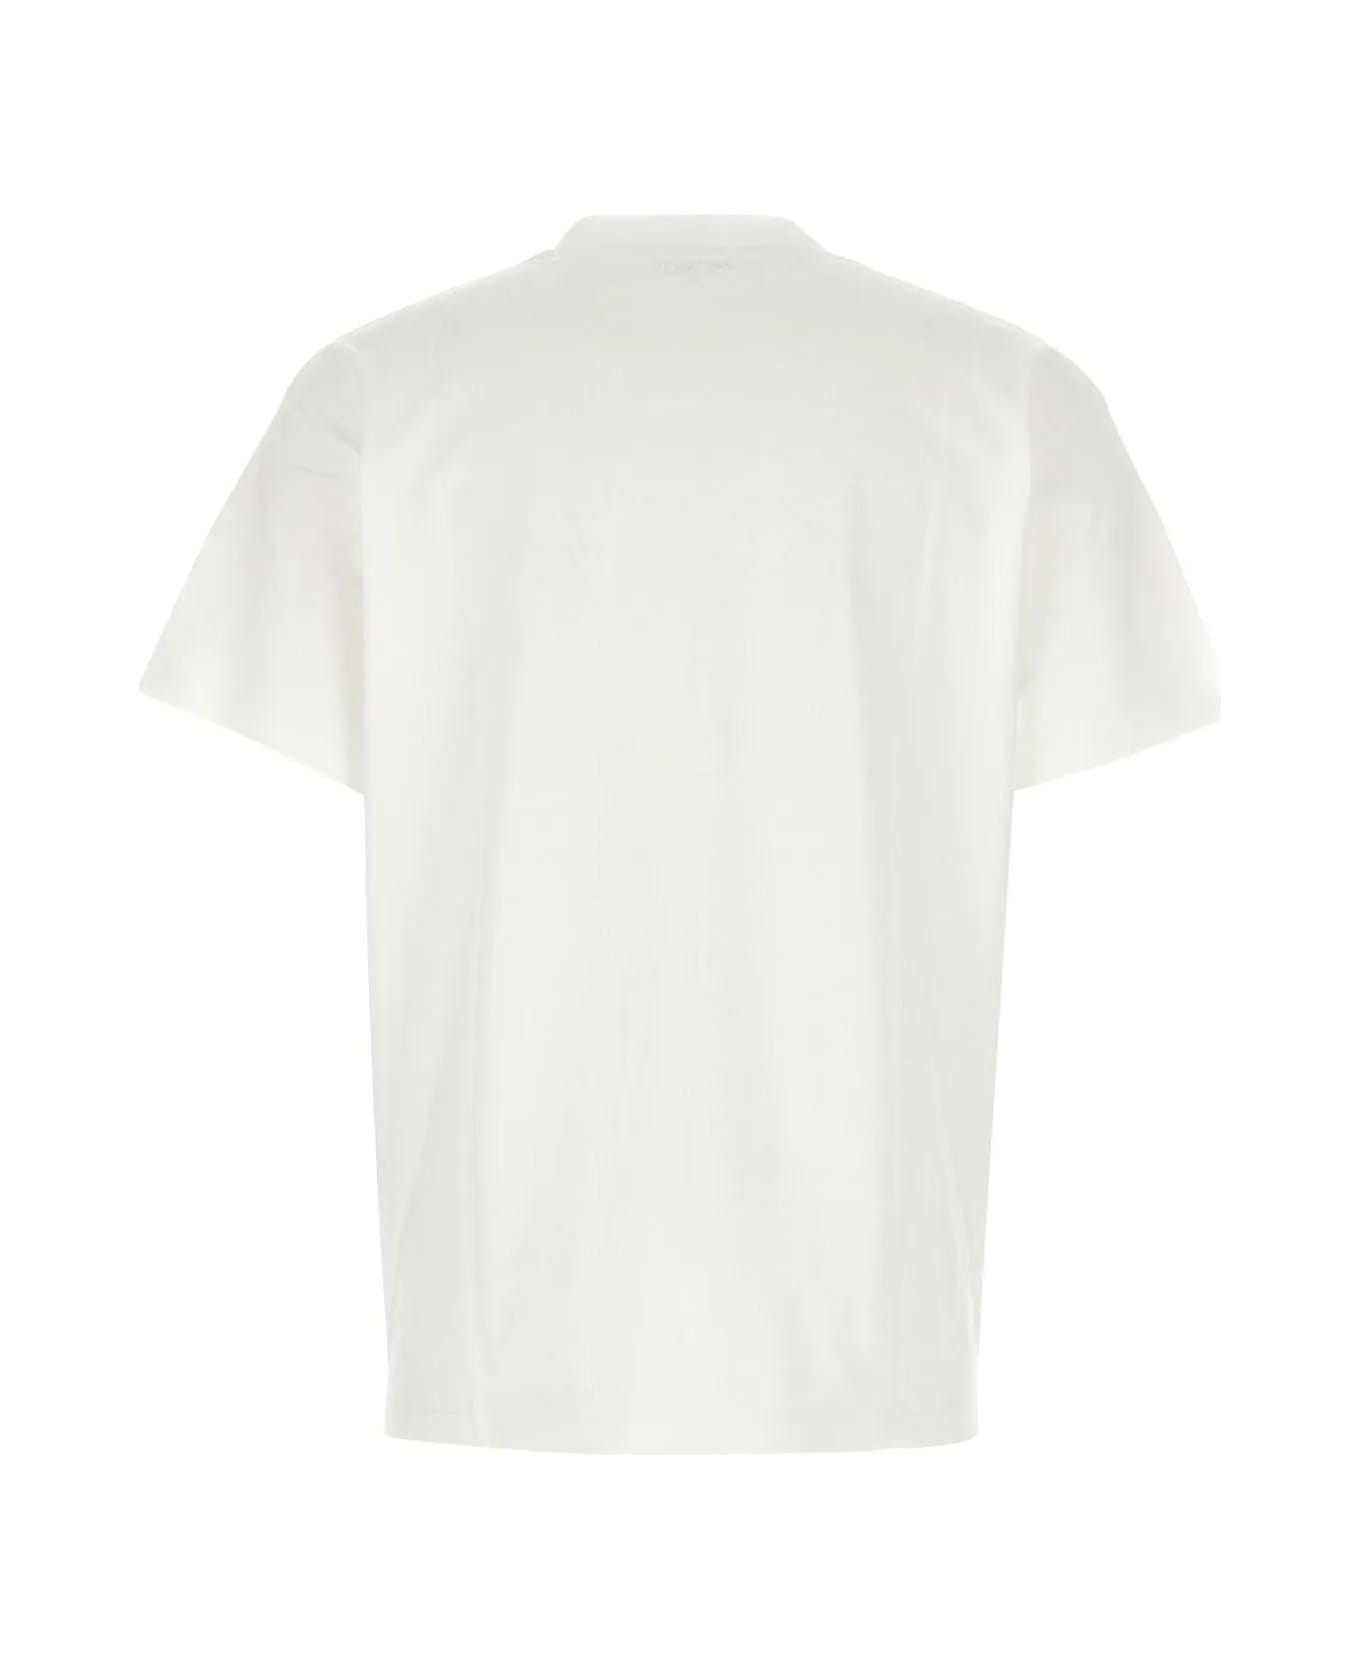 Carhartt White Cotton S/s University T-shirt - Bianco